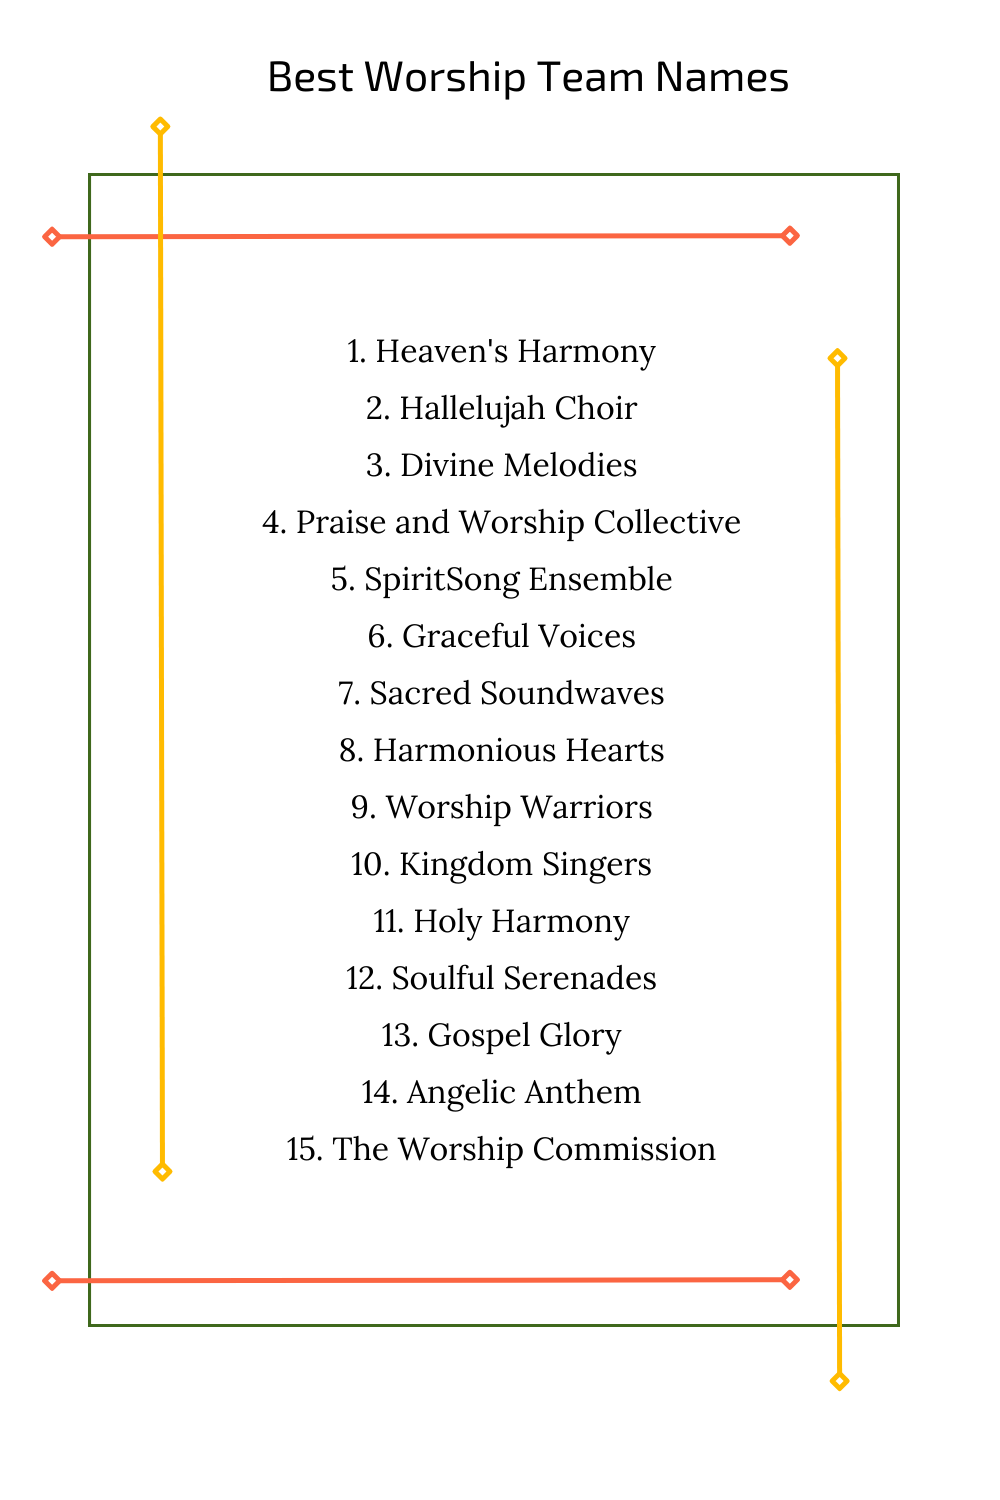 Best Worship Team Names